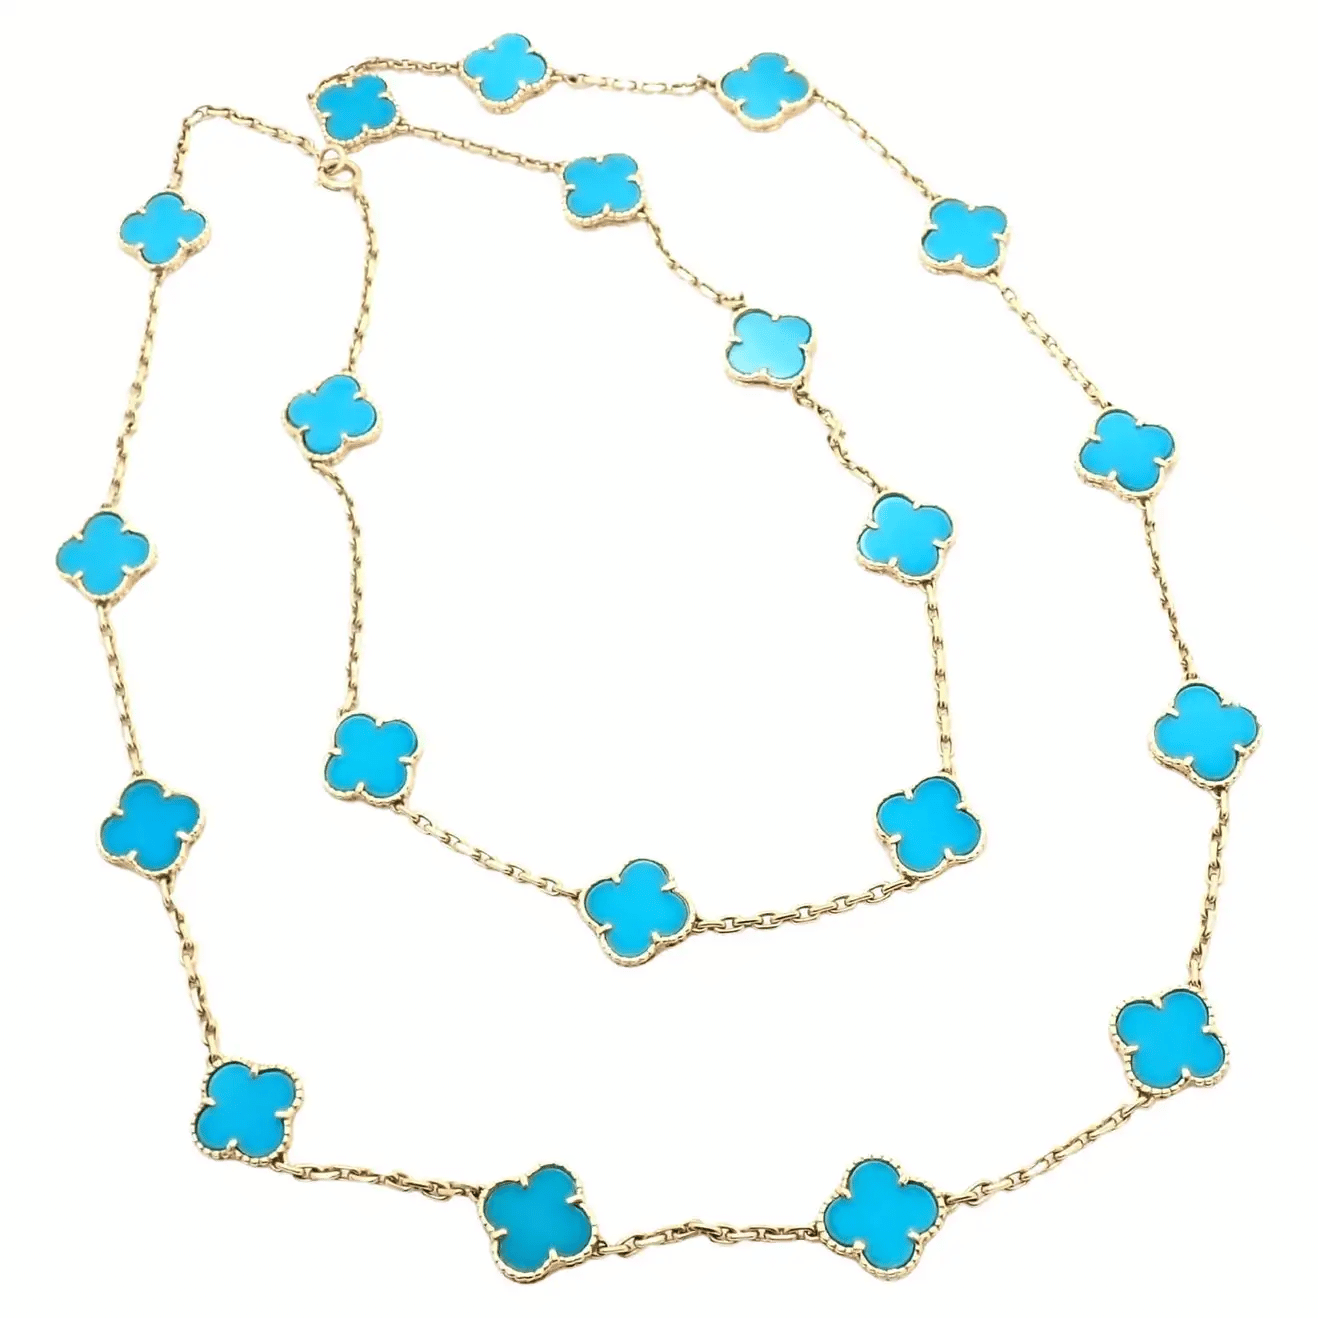 Van Cleef & Arpels alhambra necklace in turquoise